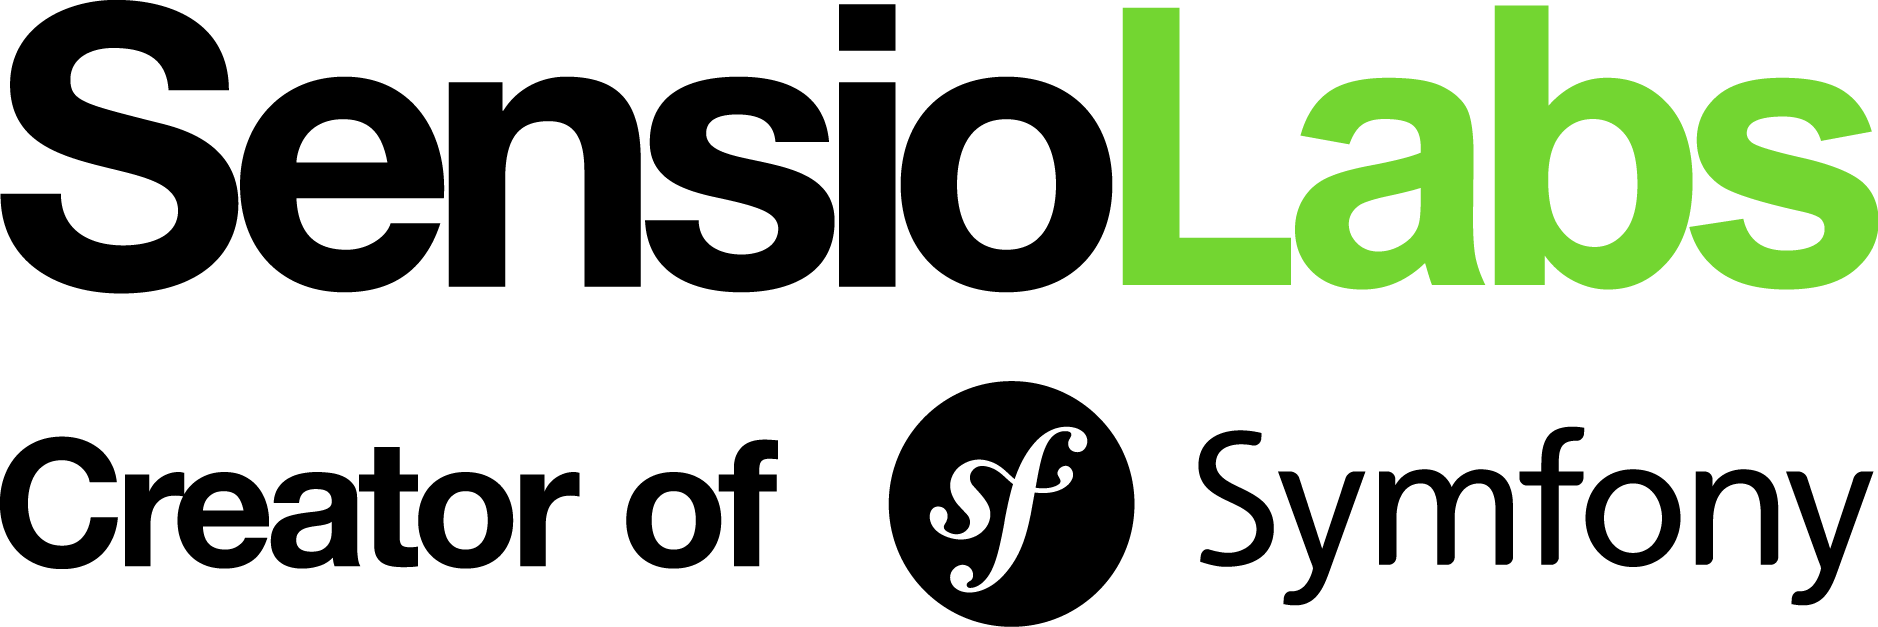 Logo of SensioLabs